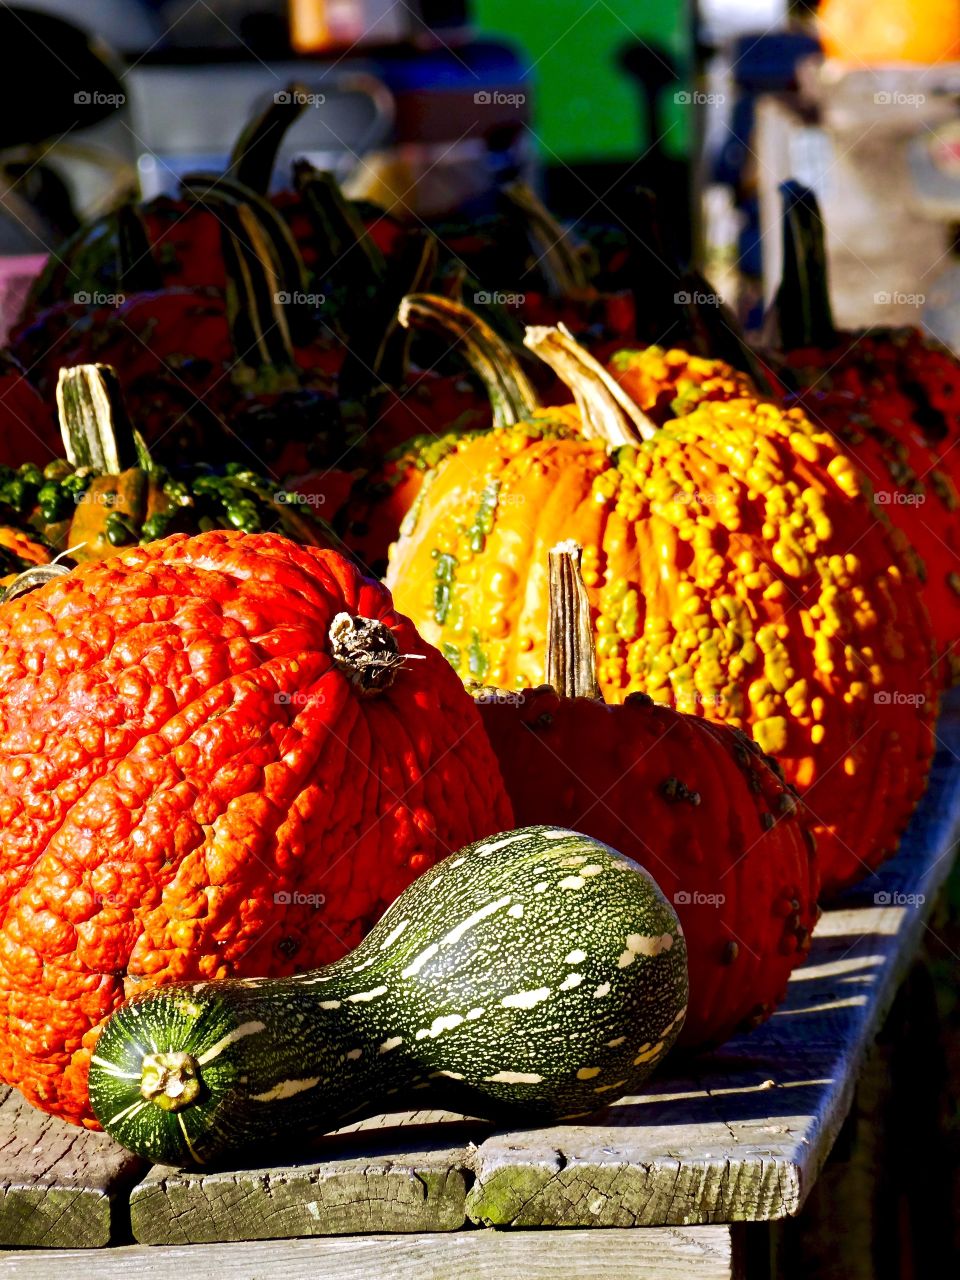 Bumpkins! Totally cute bumpy pumpkins of the autumn season.